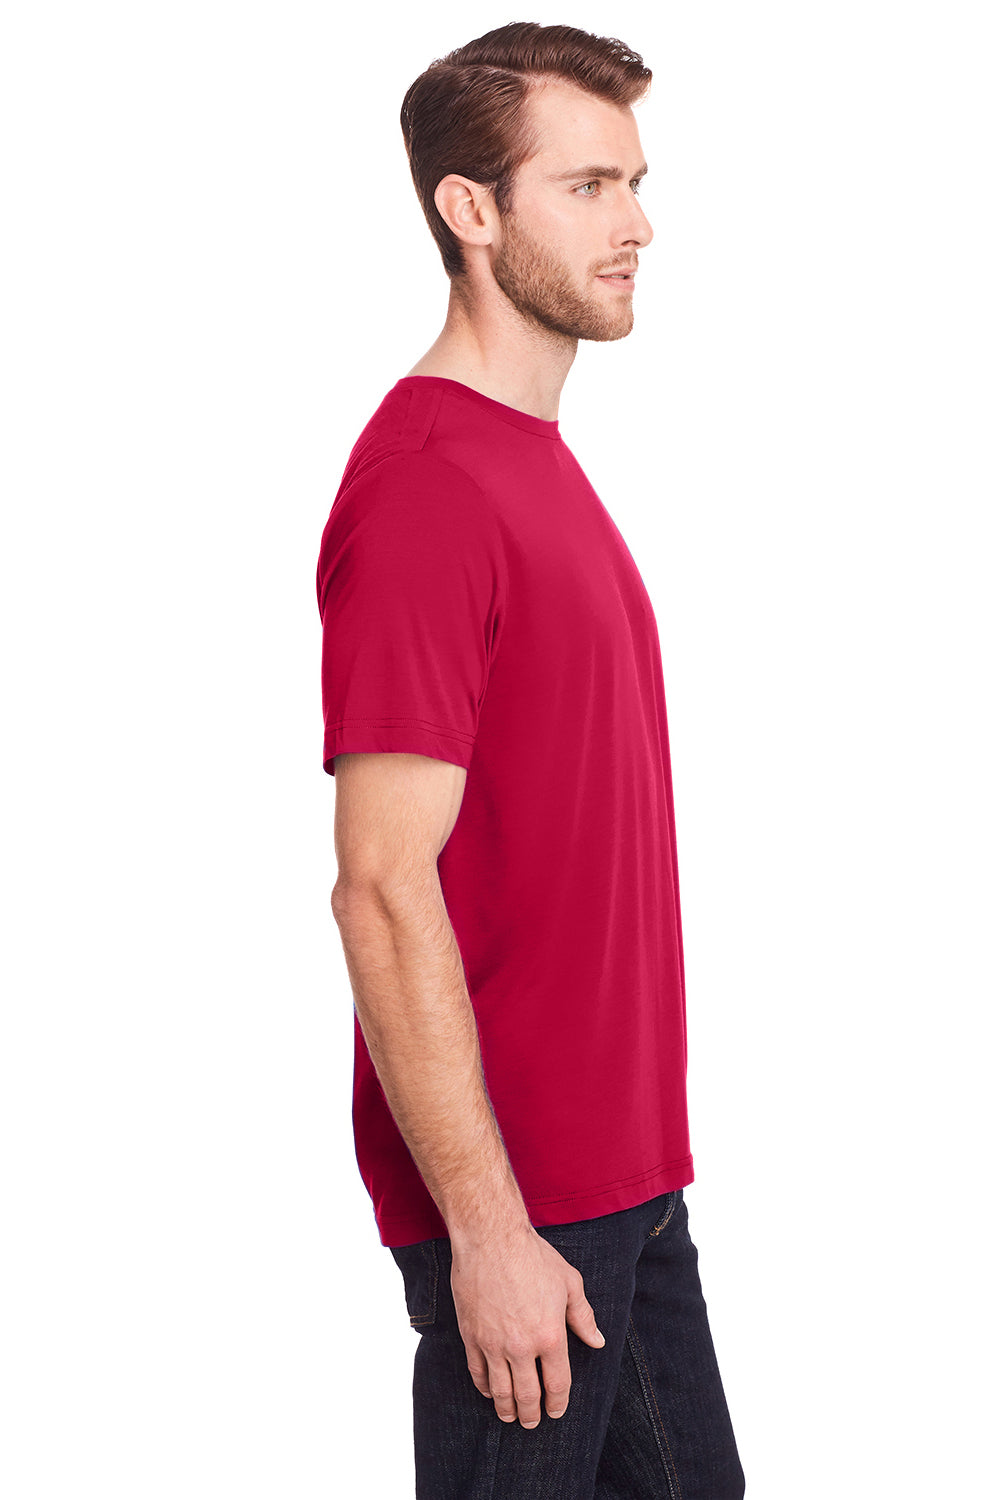 Core 365 CE111 Mens Fusion ChromaSoft Performance Moisture Wicking Short Sleeve Crewneck T-Shirt Red Side